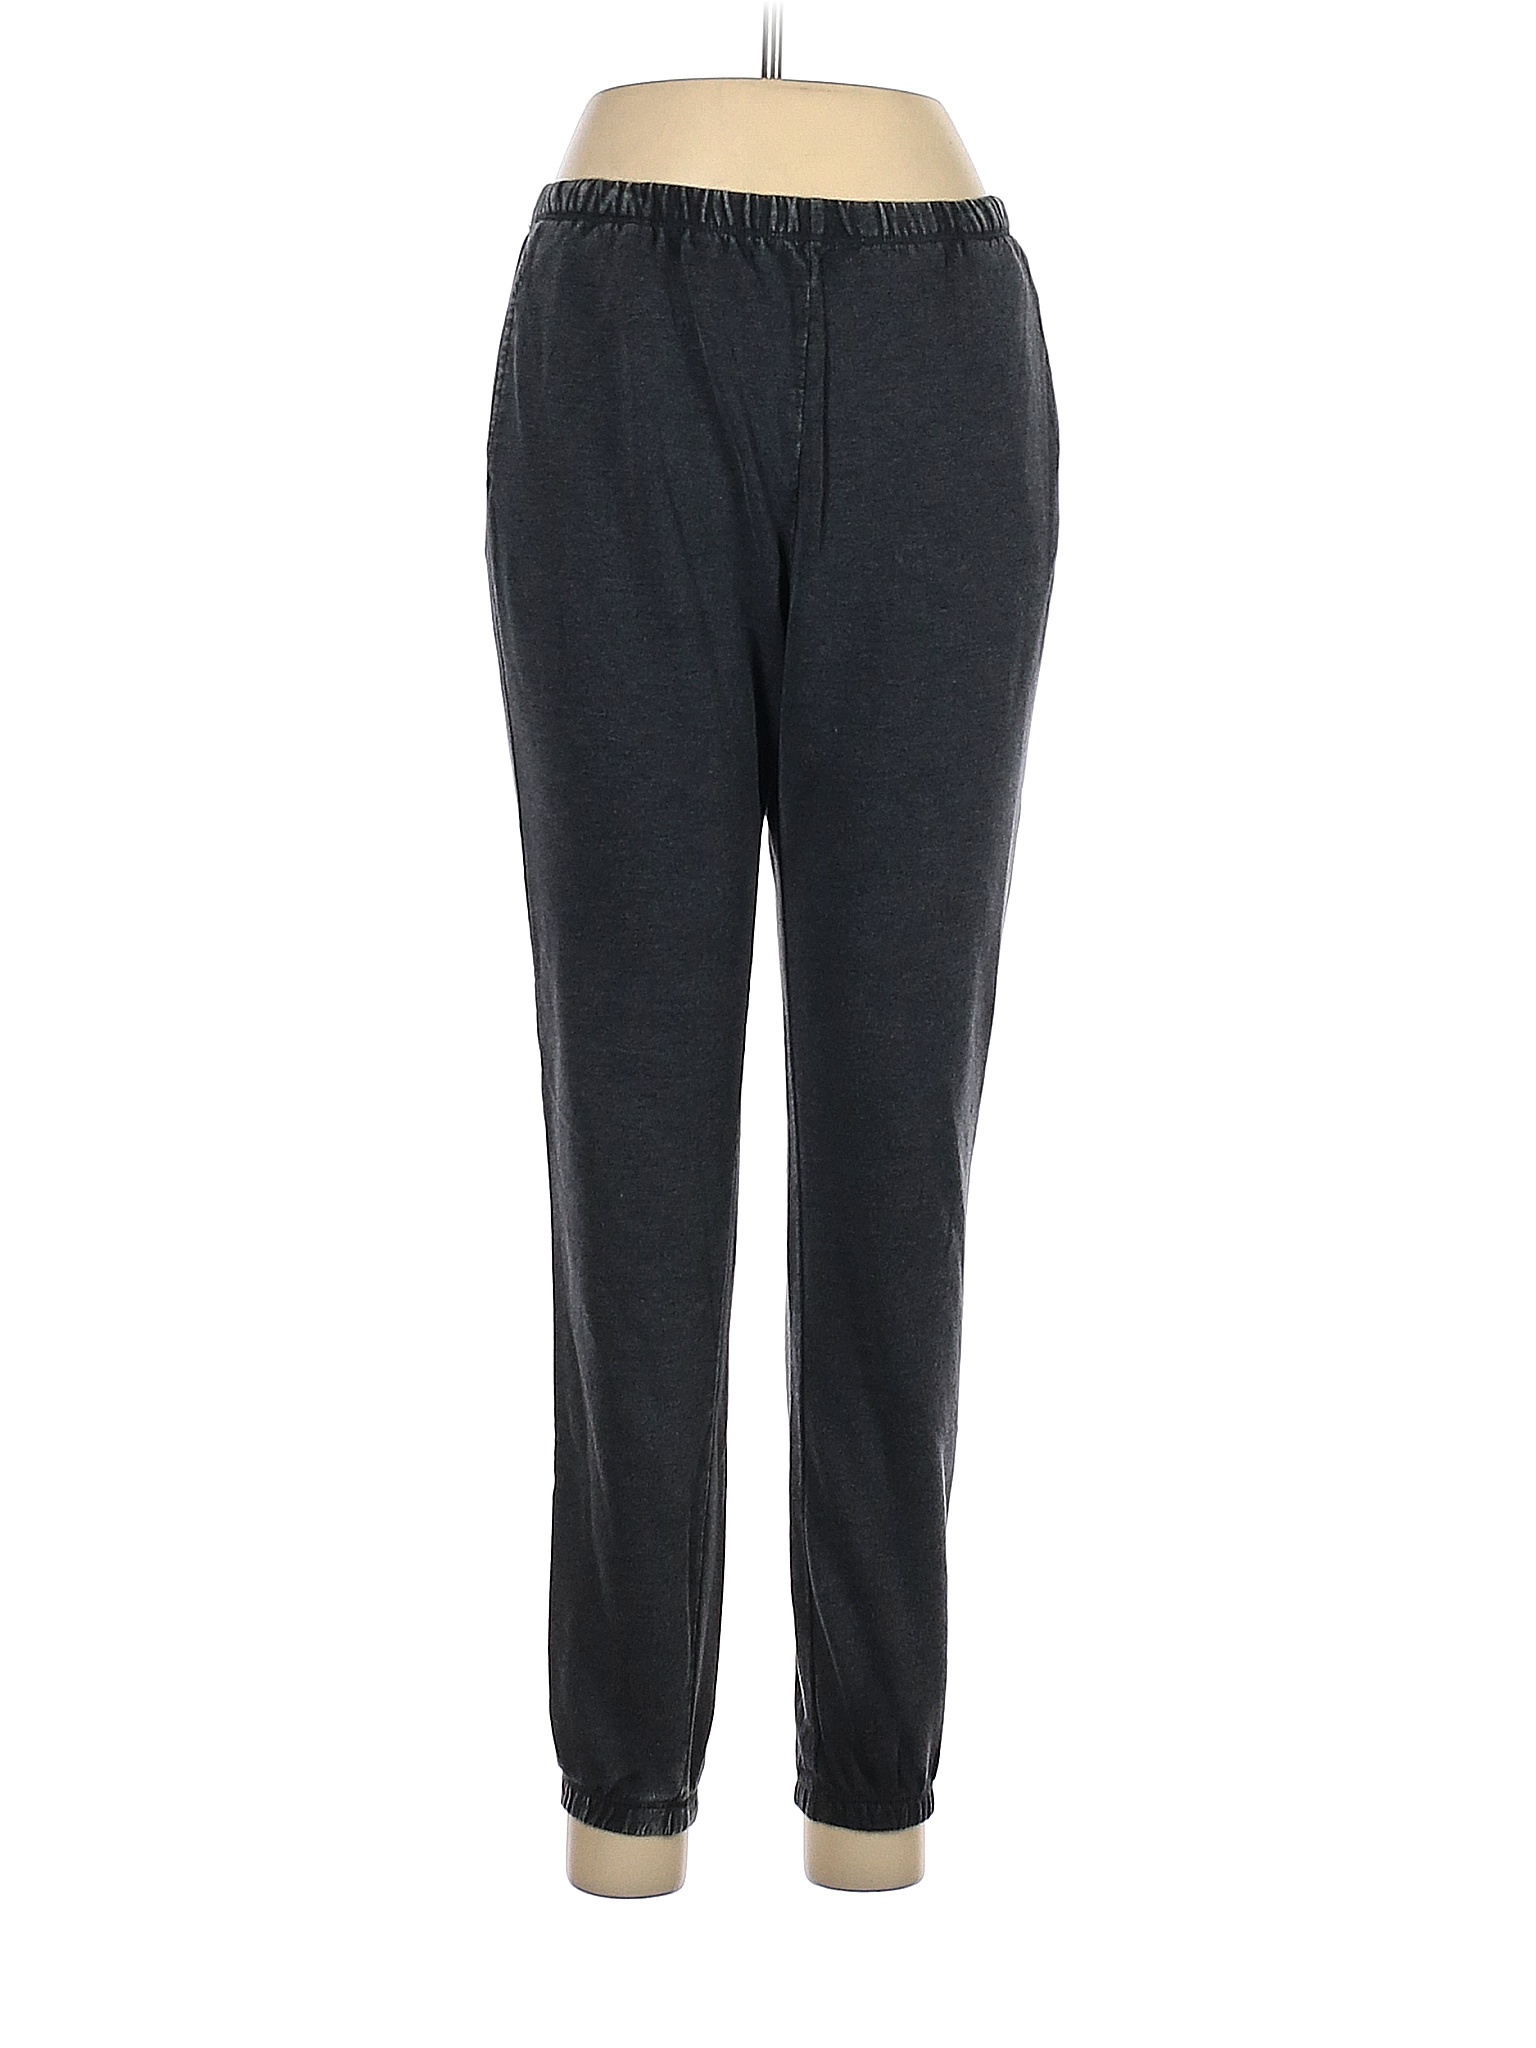 Flirtitude Solid Black Gray Active Pants Size M - 52% off